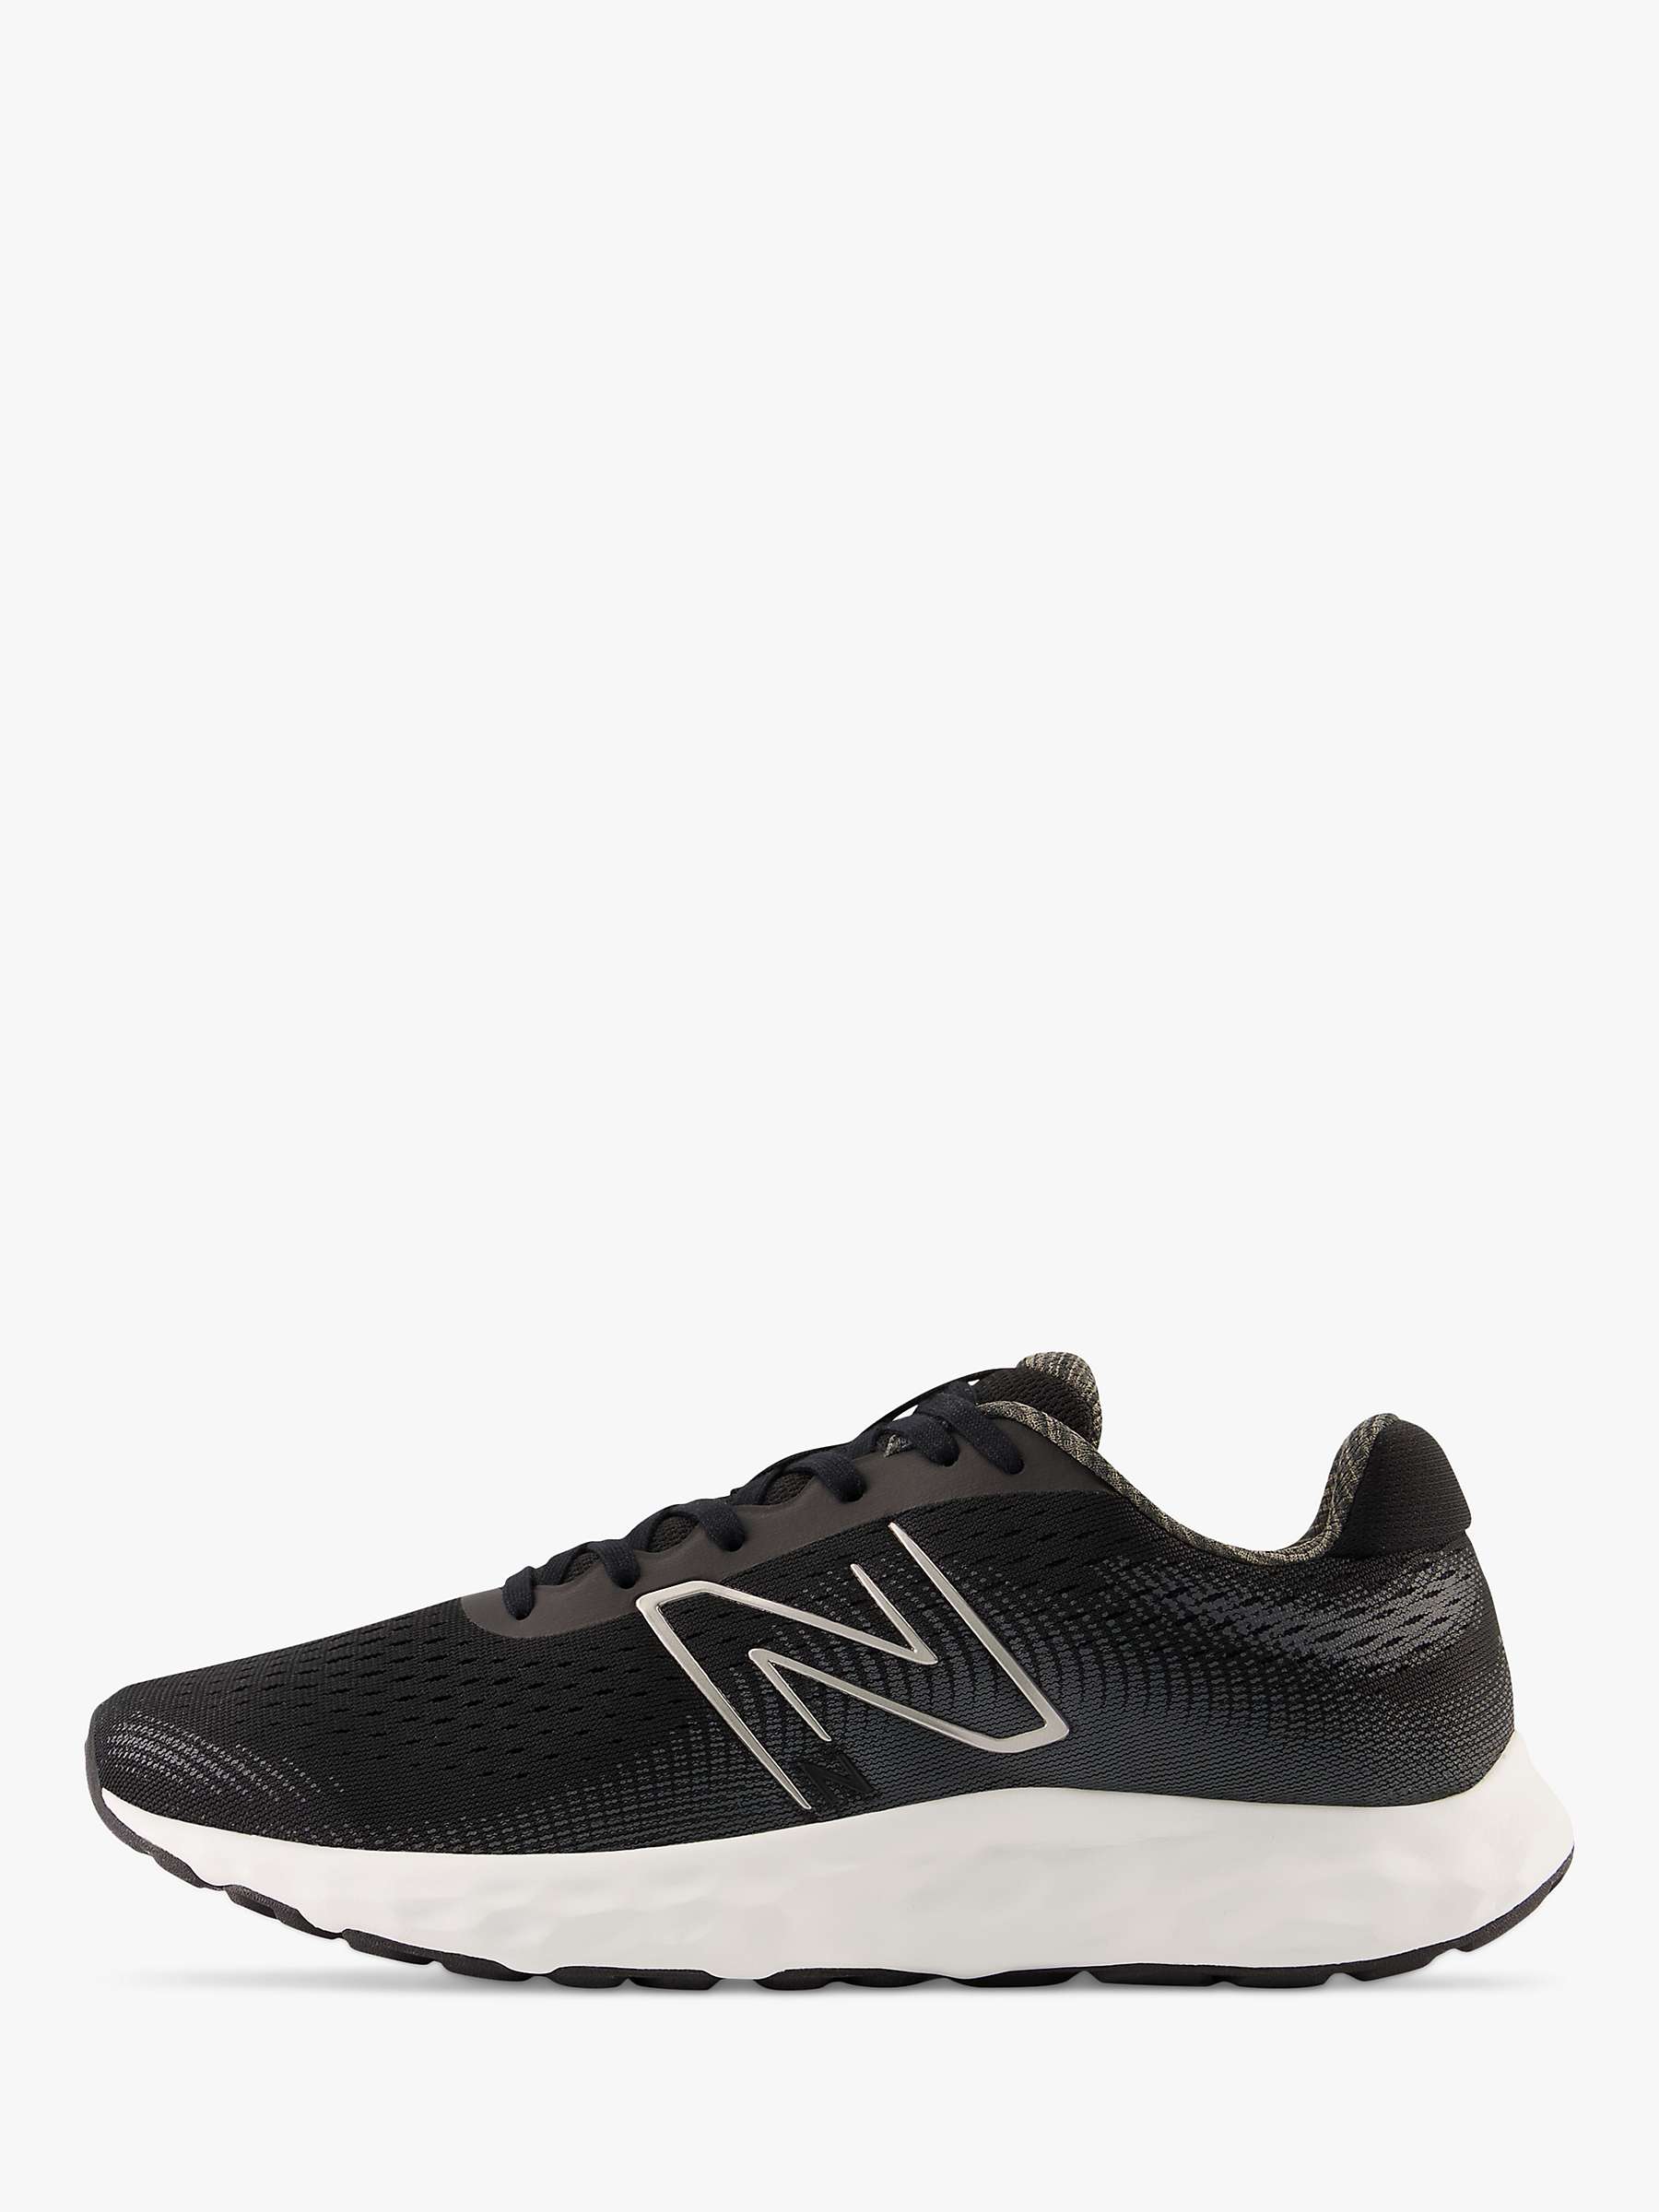 Buy New Balance 520v8 Men's Running Shoes Online at johnlewis.com